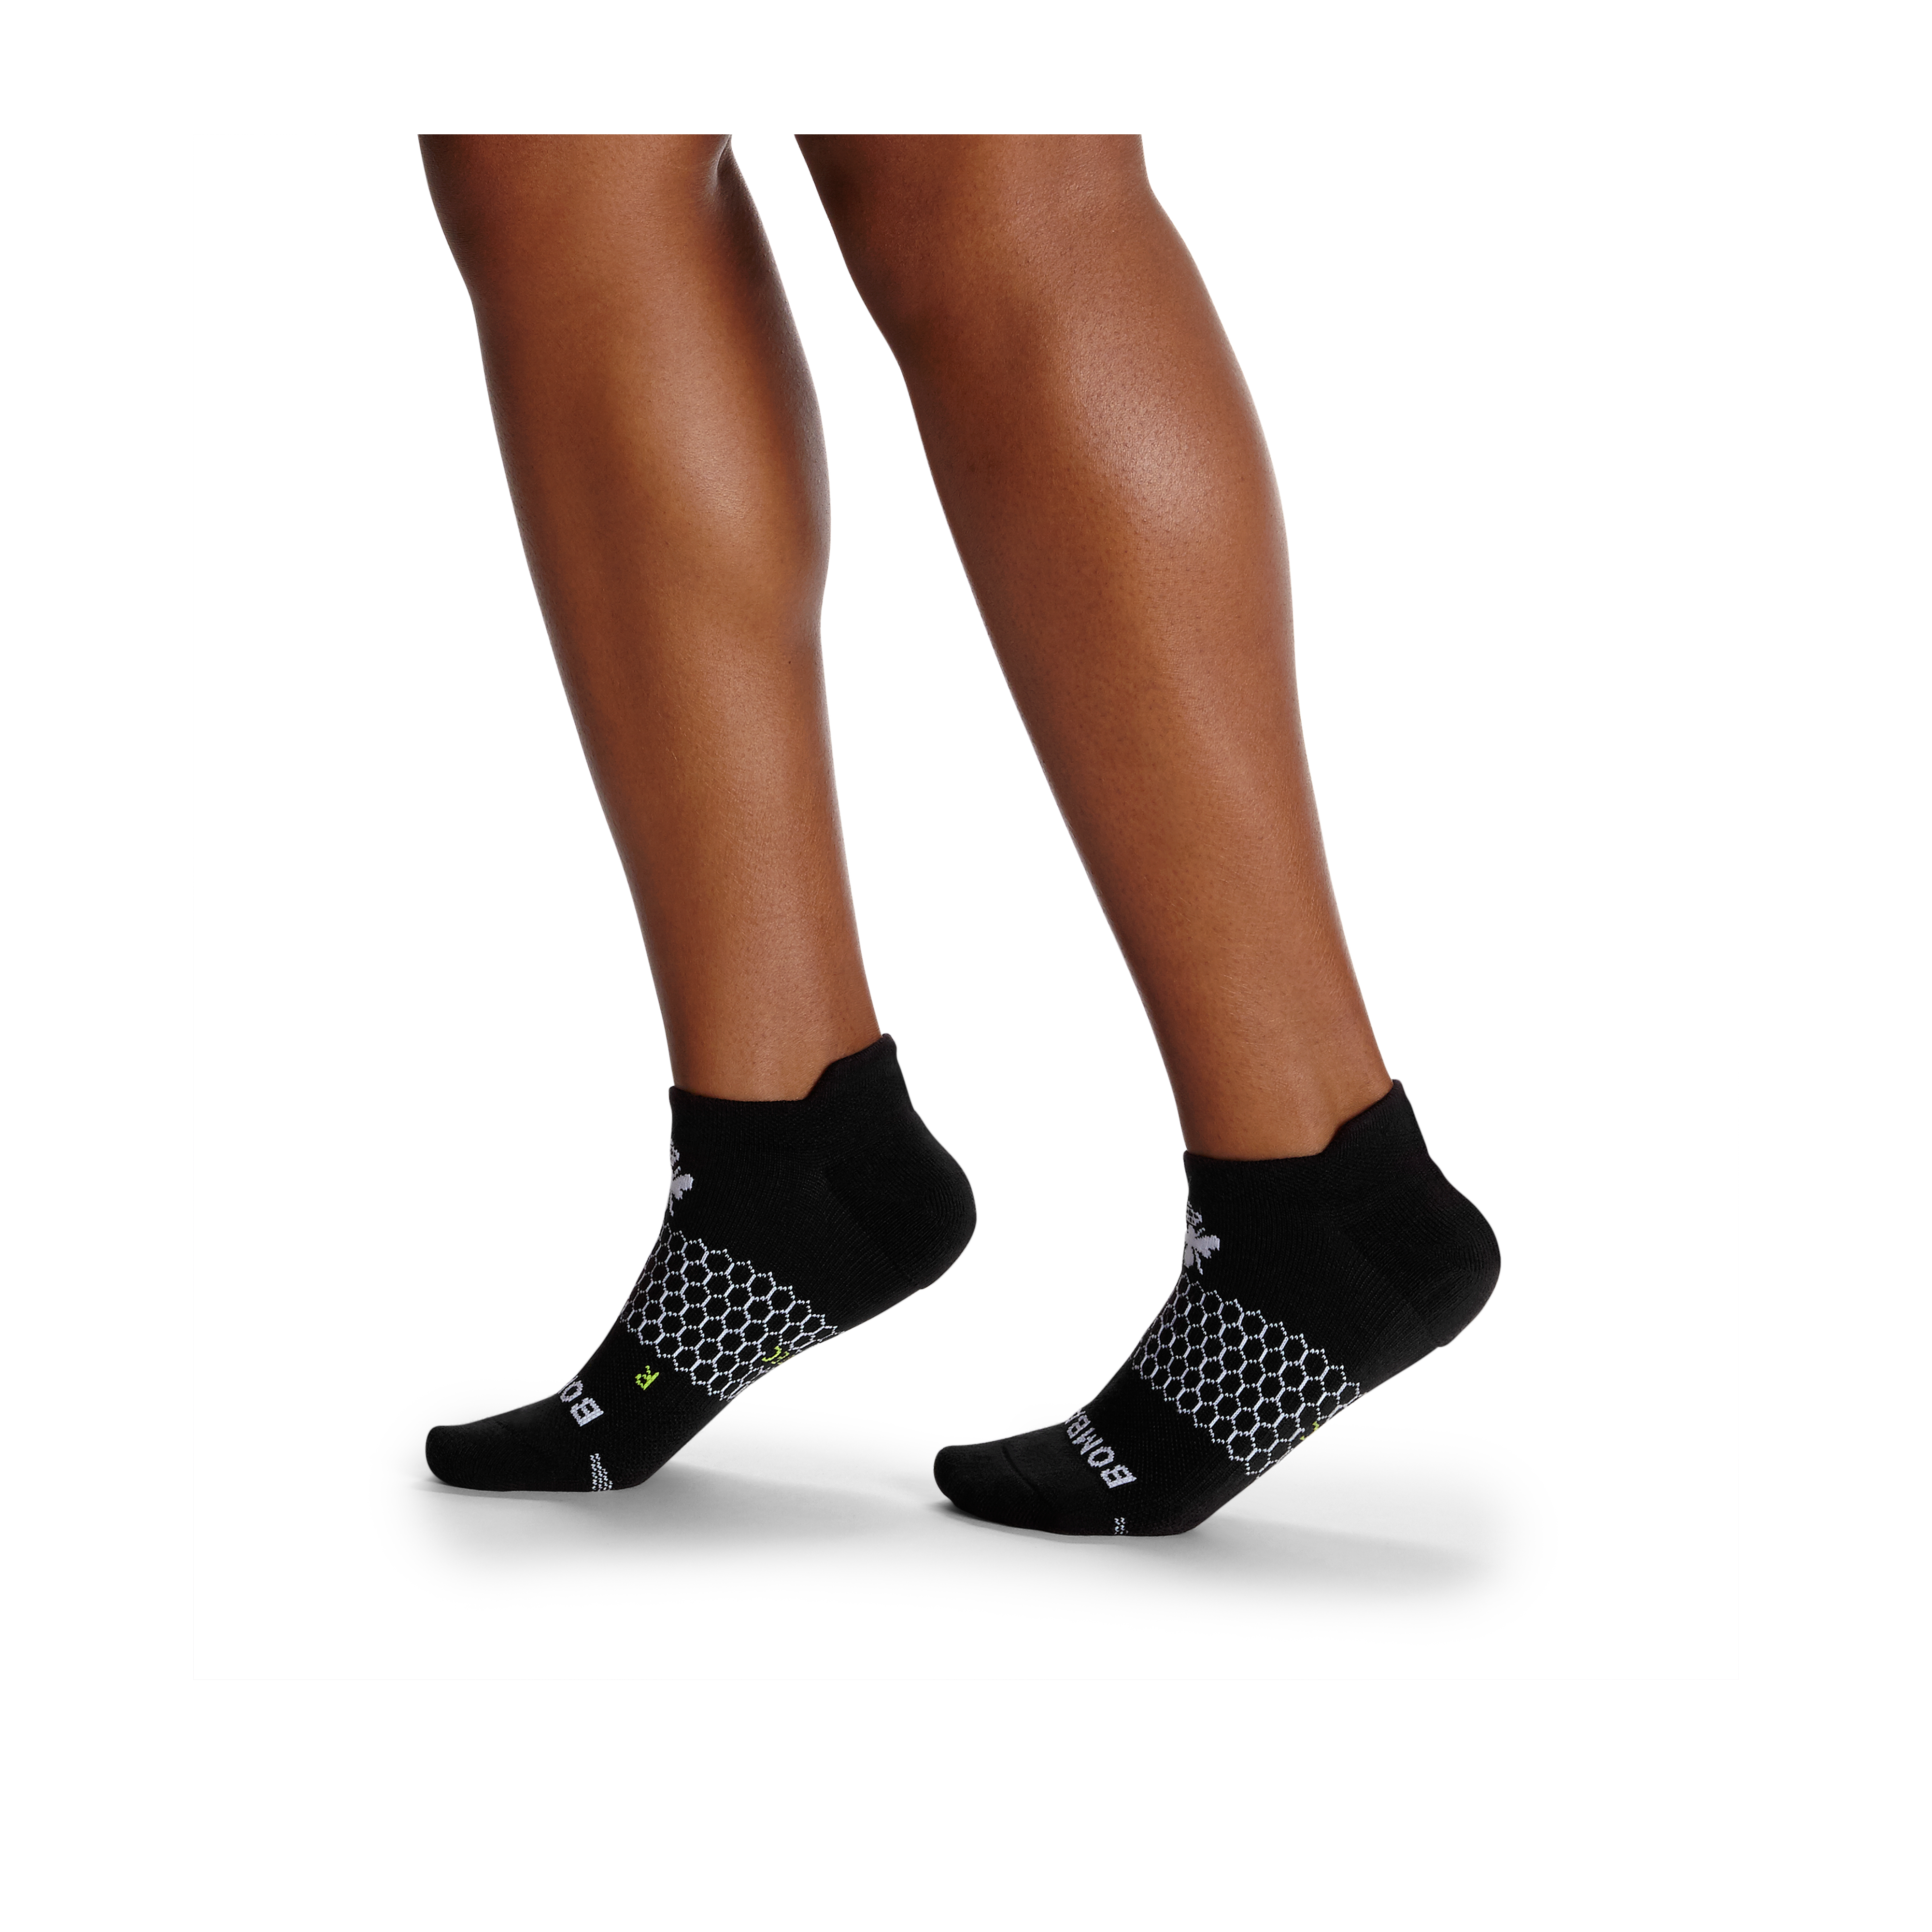 Lot of 4 pairs Bombas socks Women's Performance Gripper Ankle - L